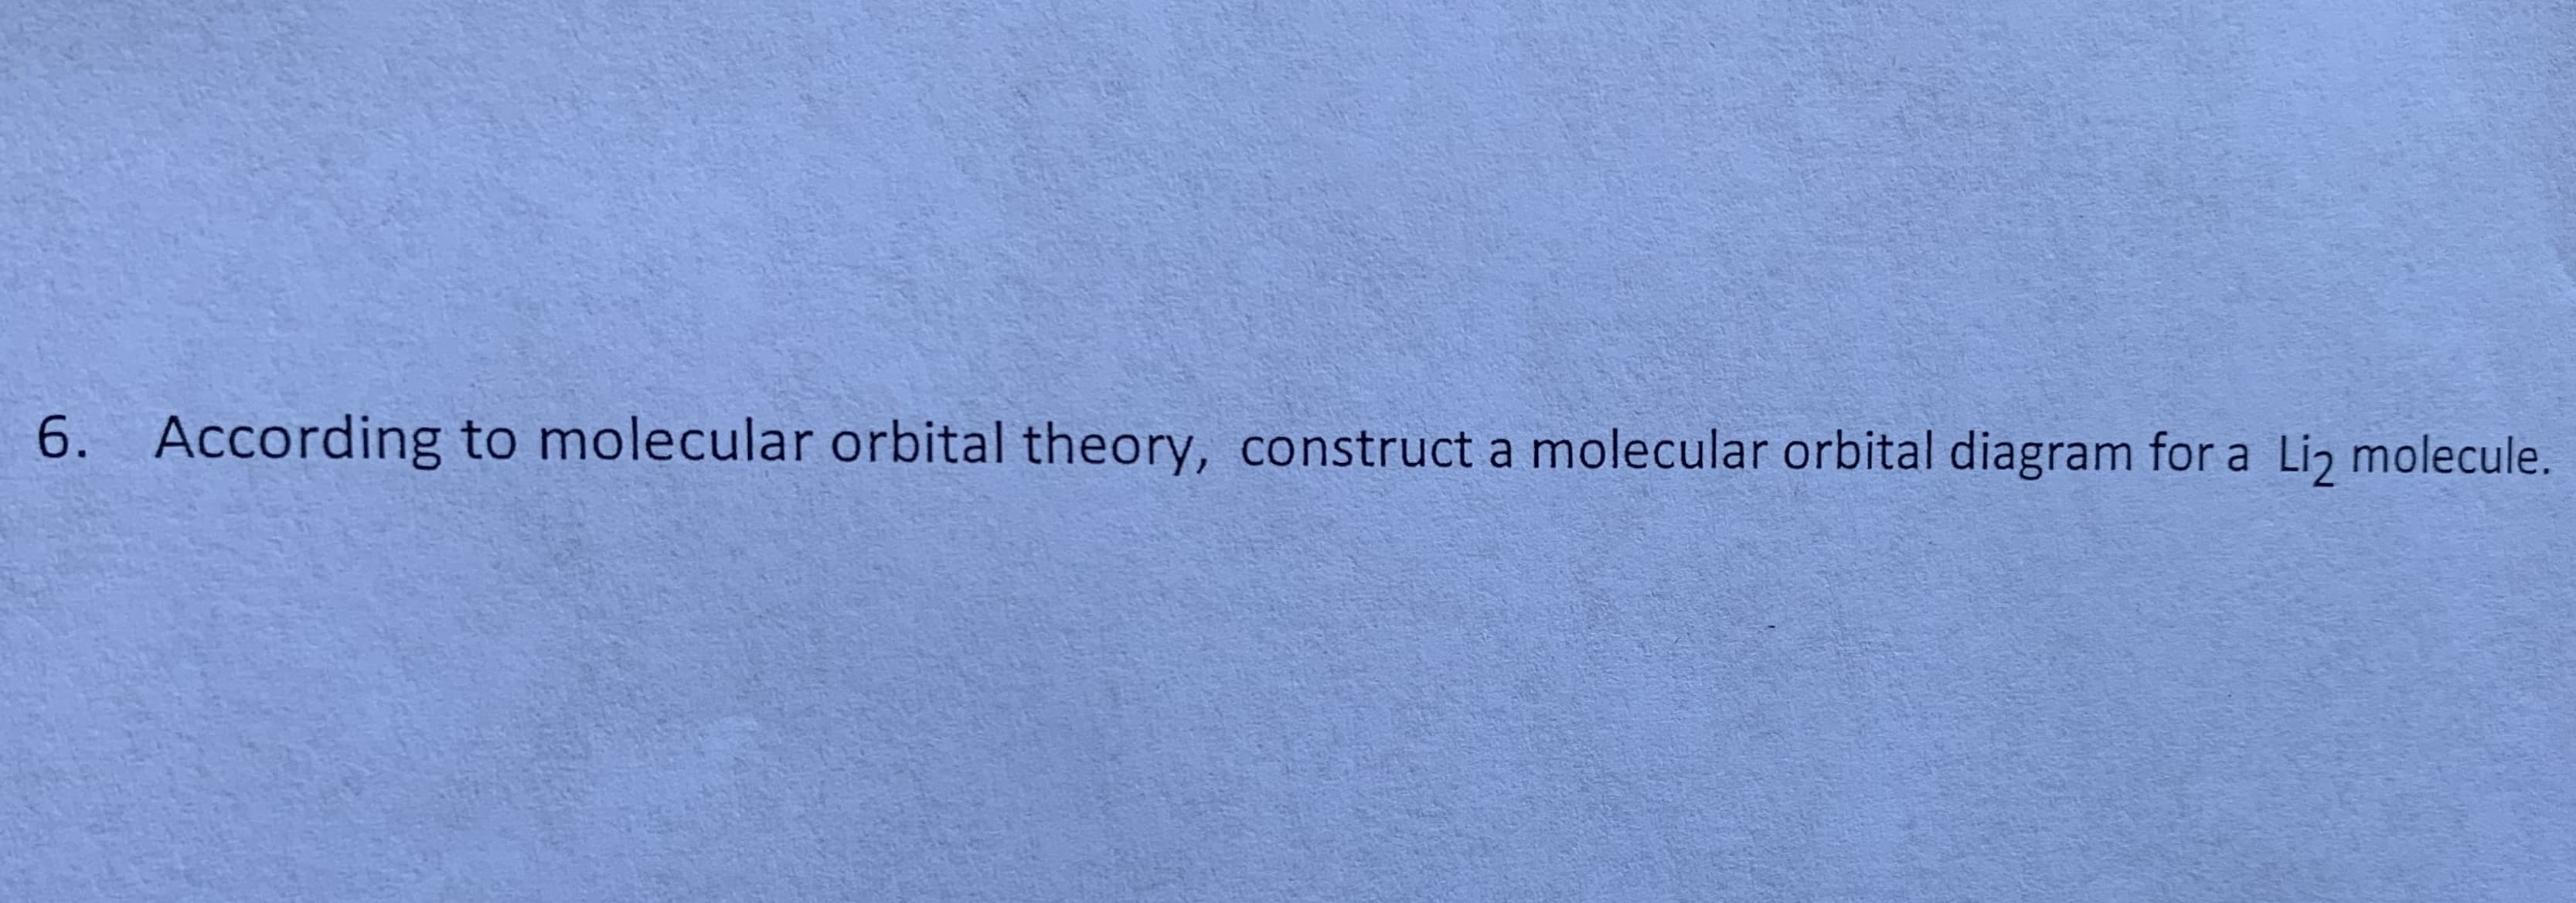 According to molecular orbital theory, construct a molecular orbital diagram for a Li2 molecule.
6.
